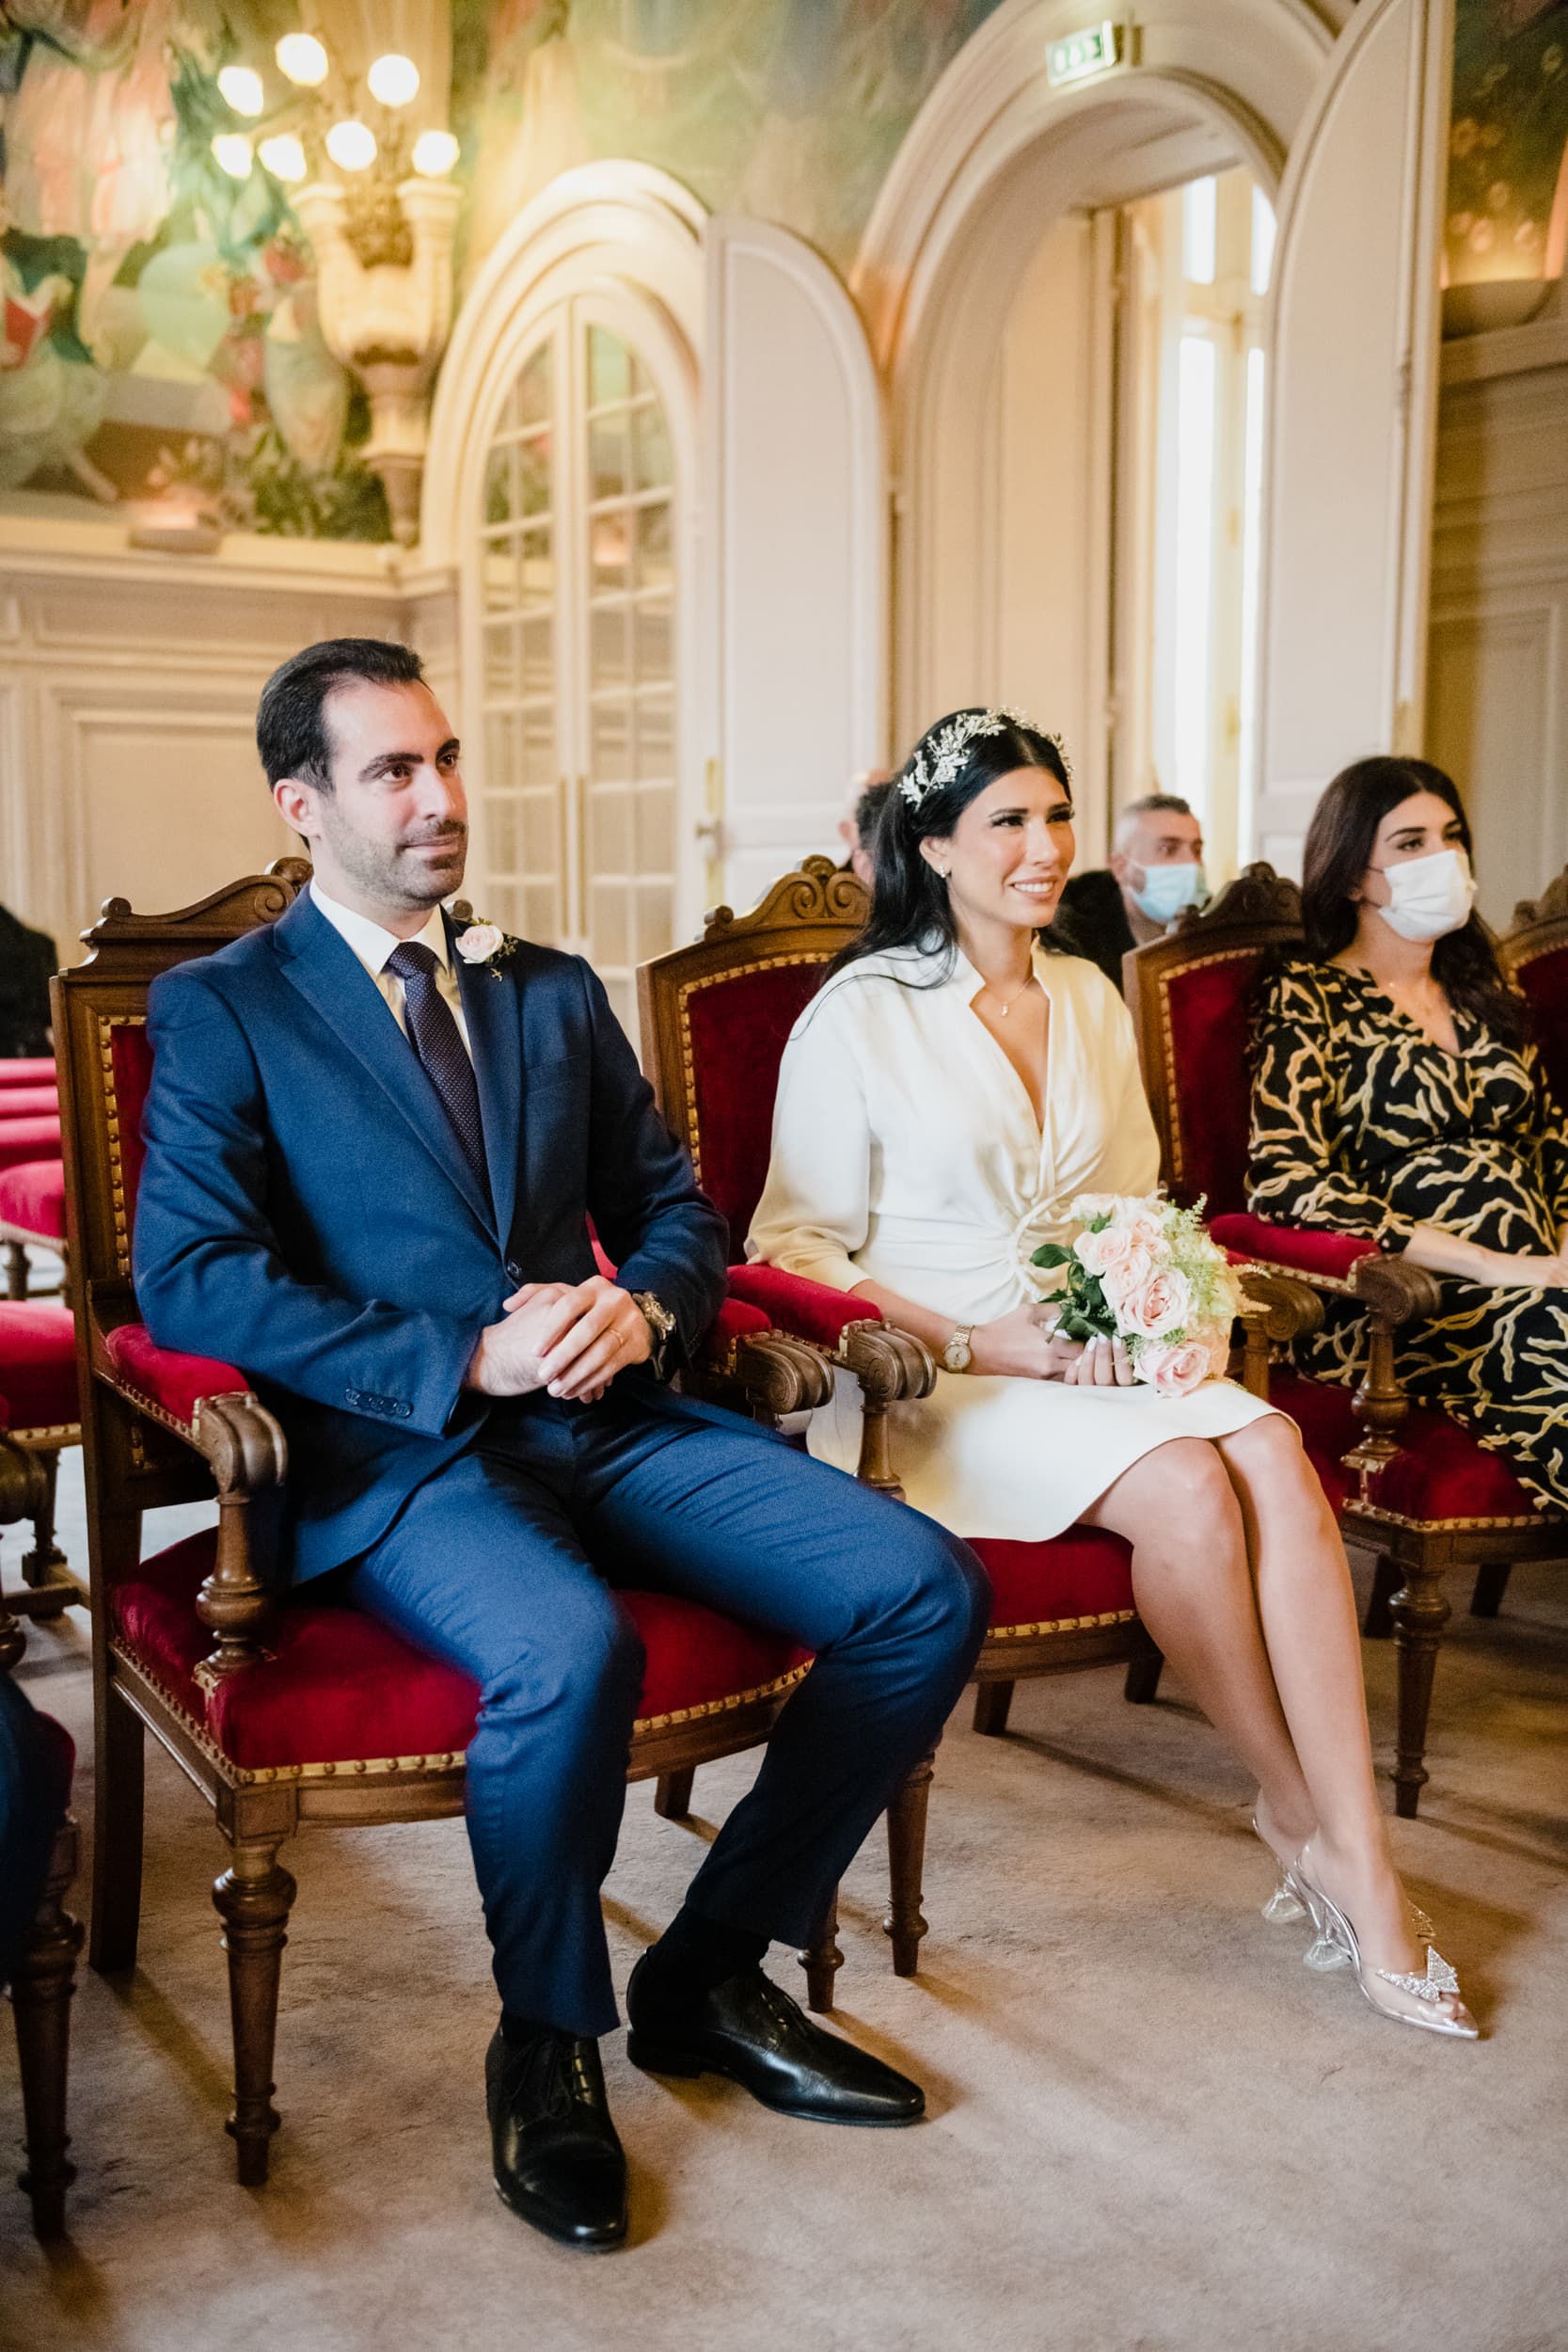 Chanel et Nadim-29Mariage Libanais Mairie de Neuilly sur seine Shooting Palais royal